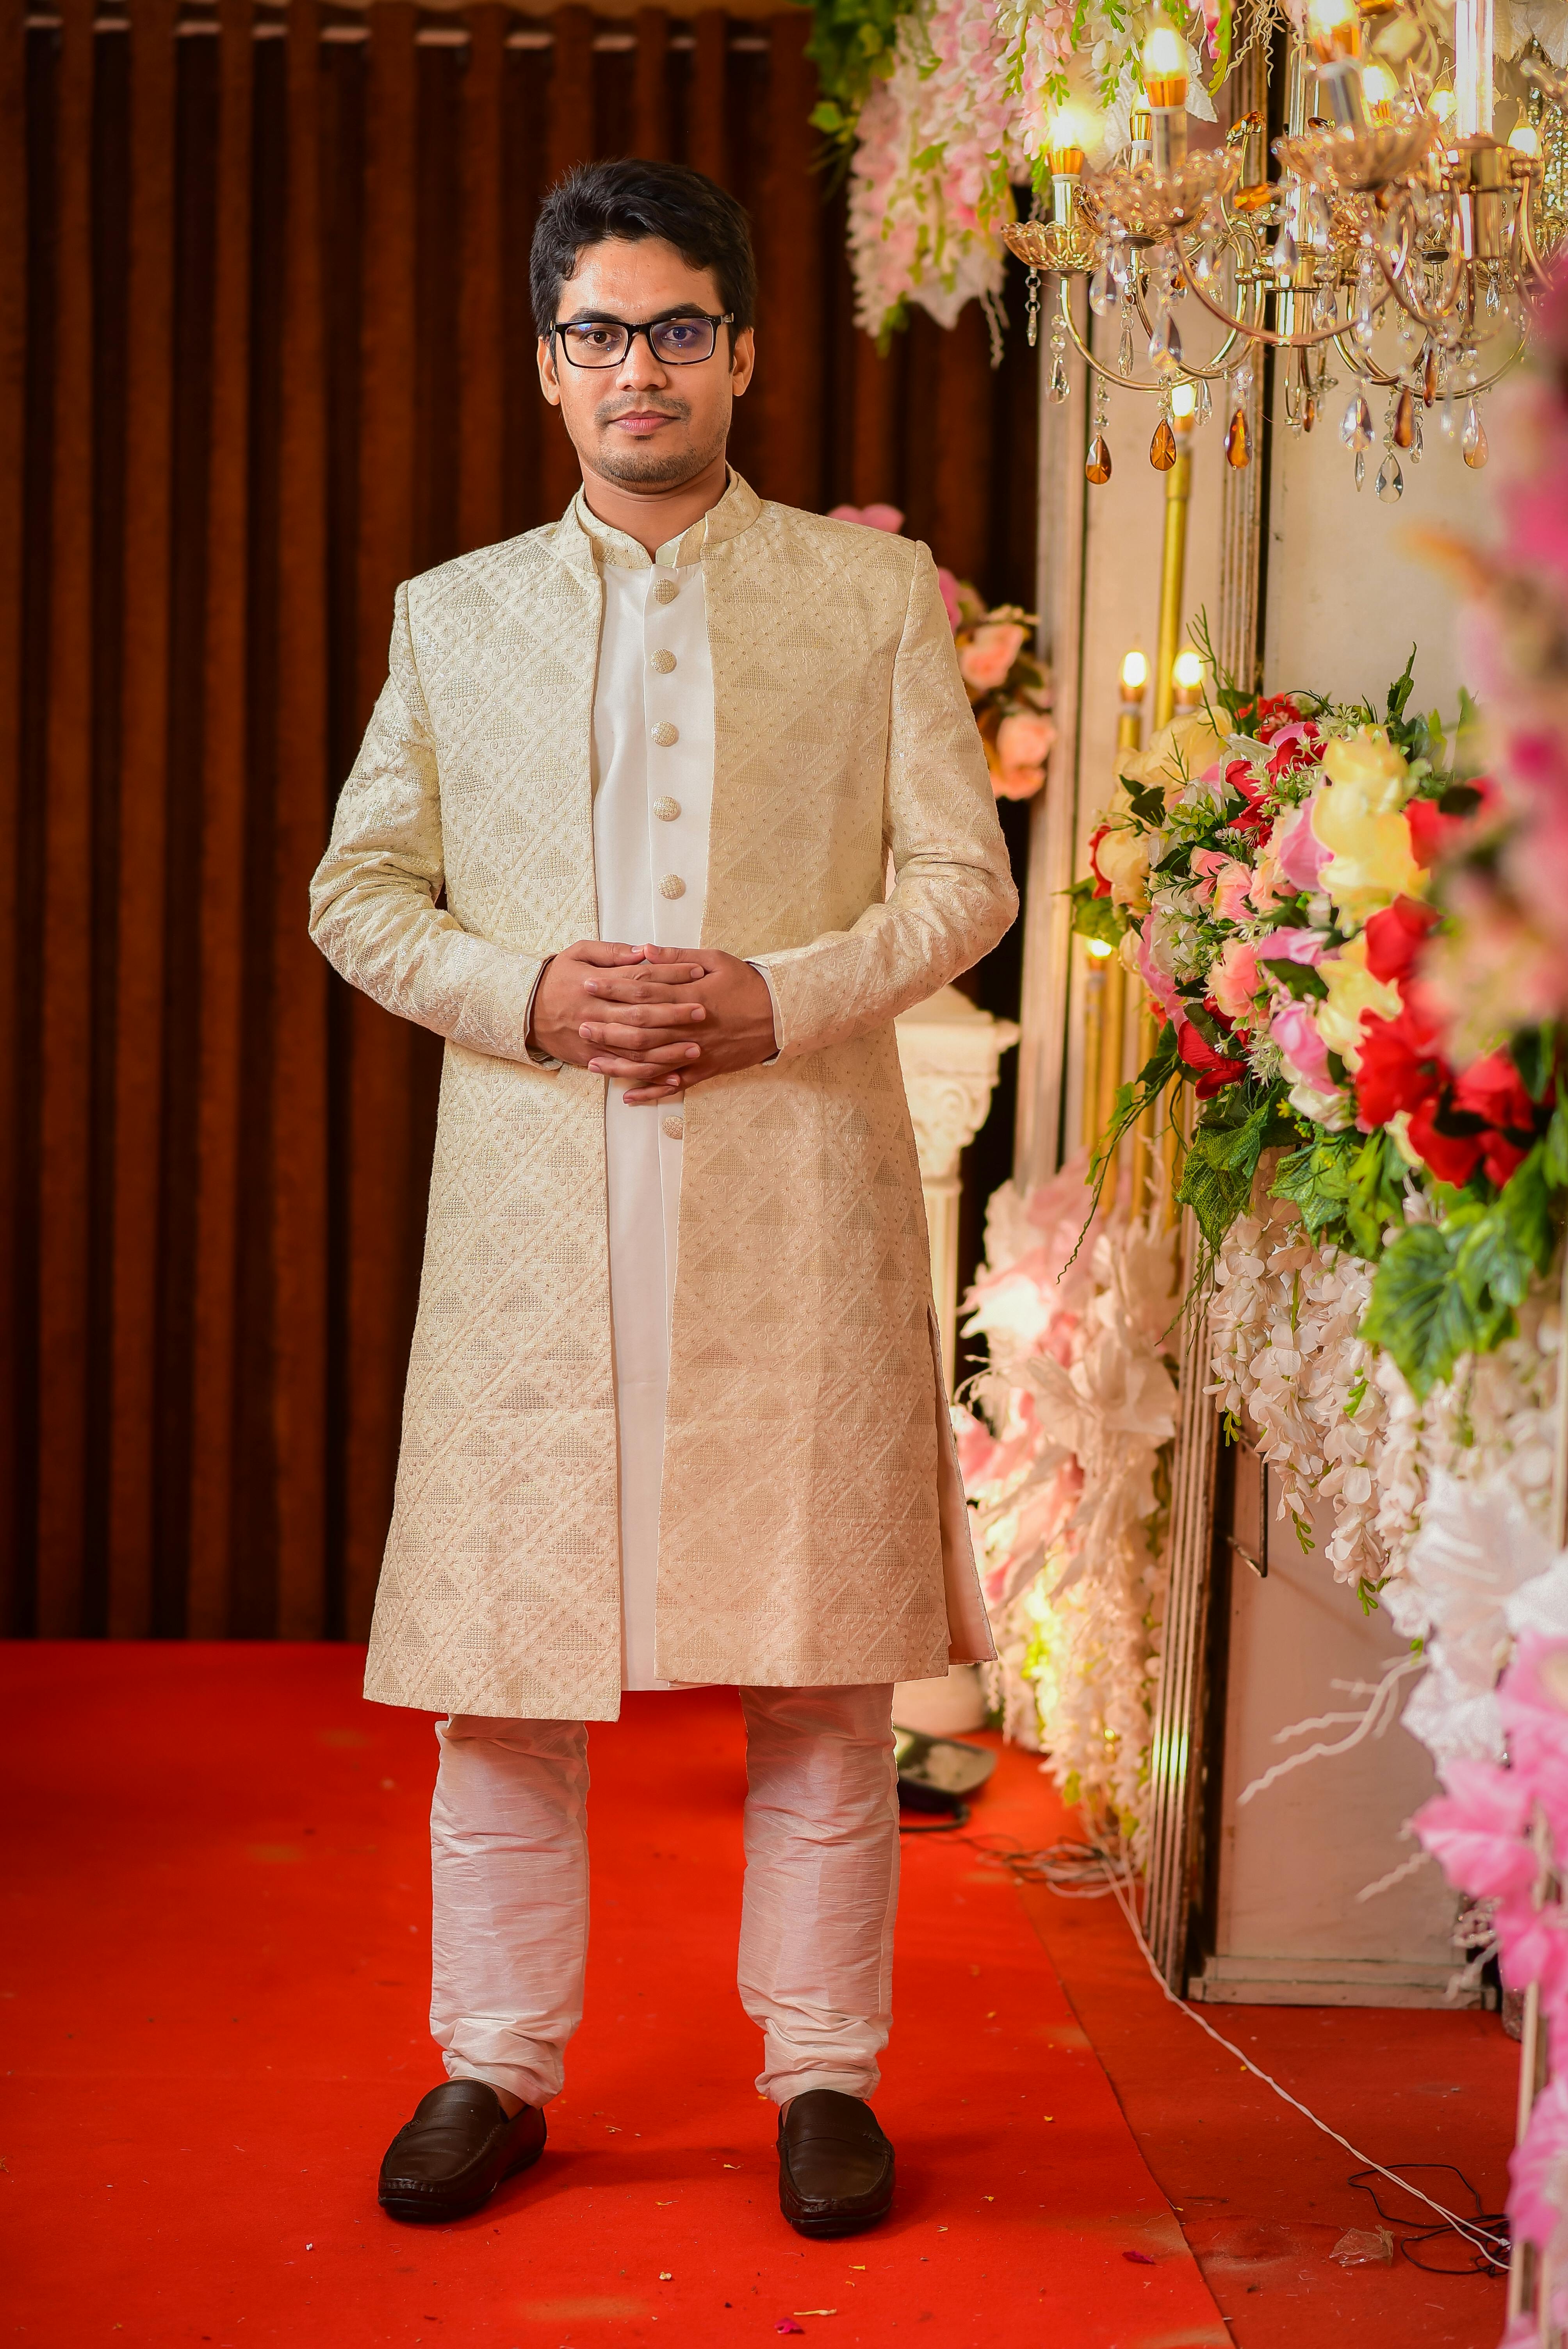 Pin by SUBODH heera on Royal family | Indian wedding fashion, Indian bride  photography poses, Indian wedding couple photography